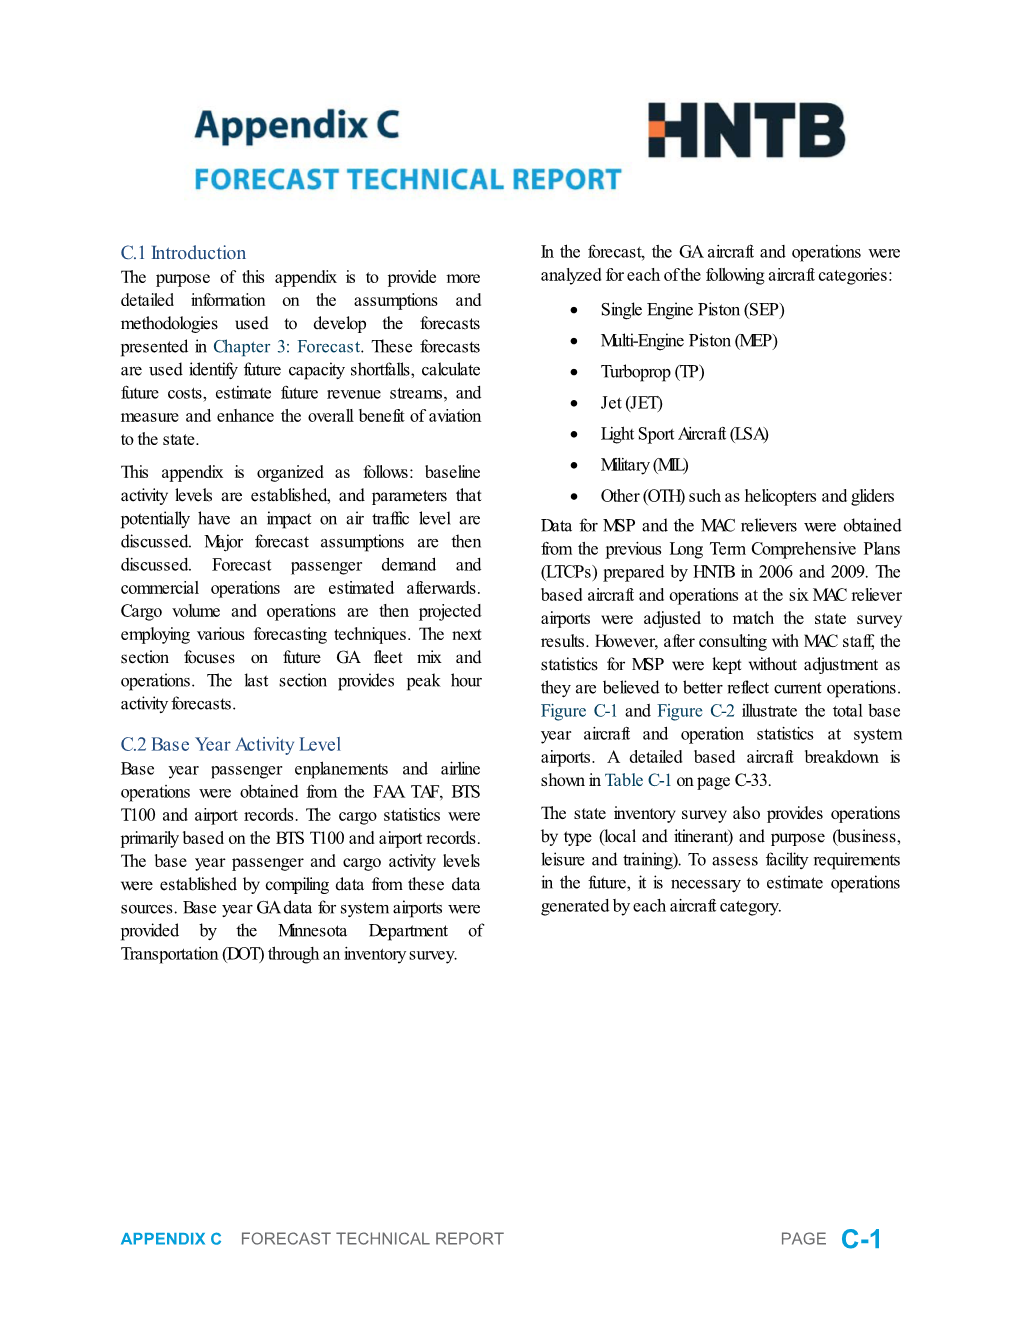 Appendix C Forecast Technical Report Page C-1